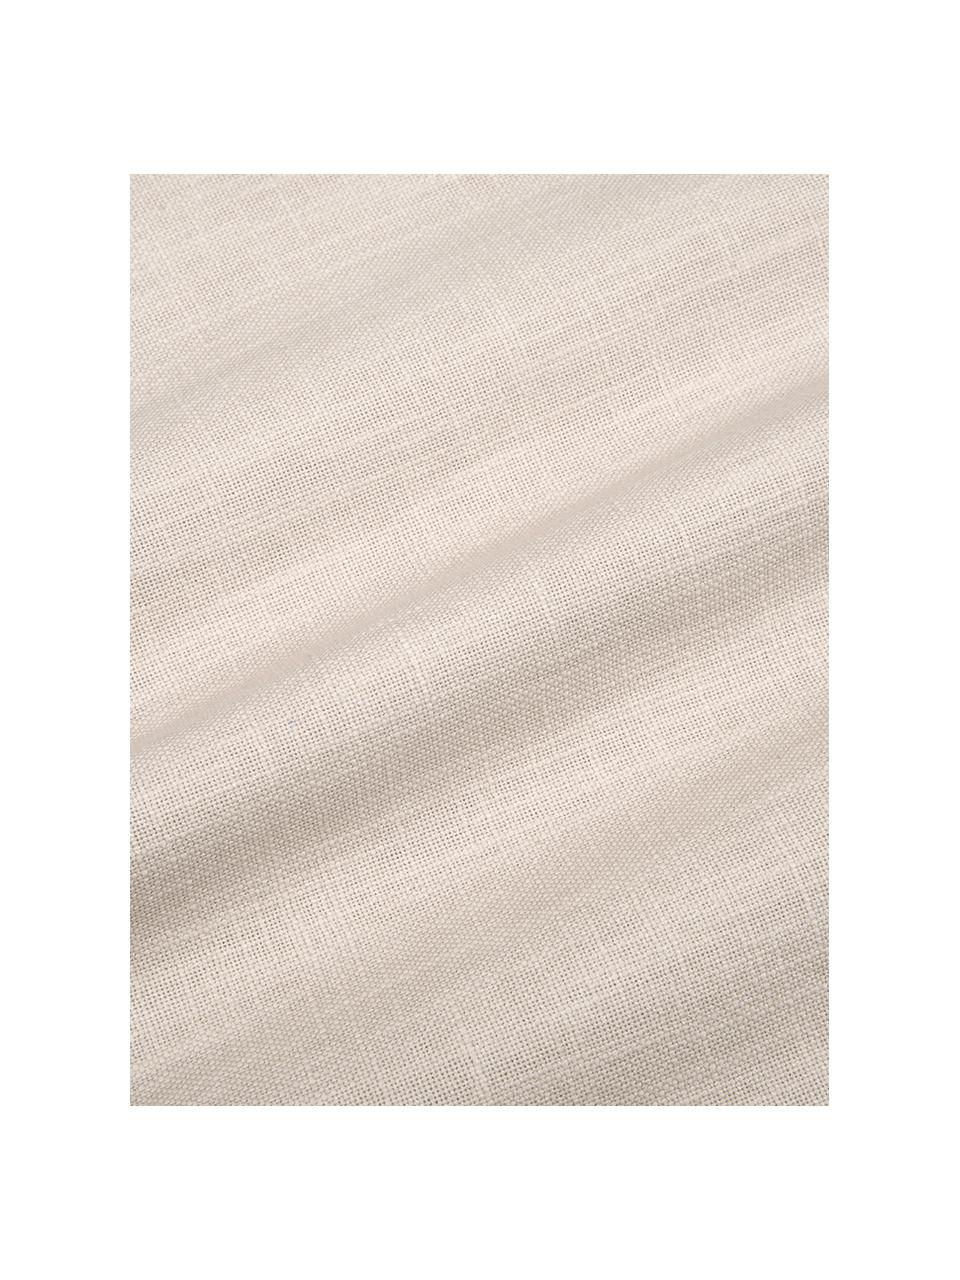 Glänzend bestickte Kissenhülle Giselle, 100% Baumwolle, Taupe-Grau, 45 x 45 cm